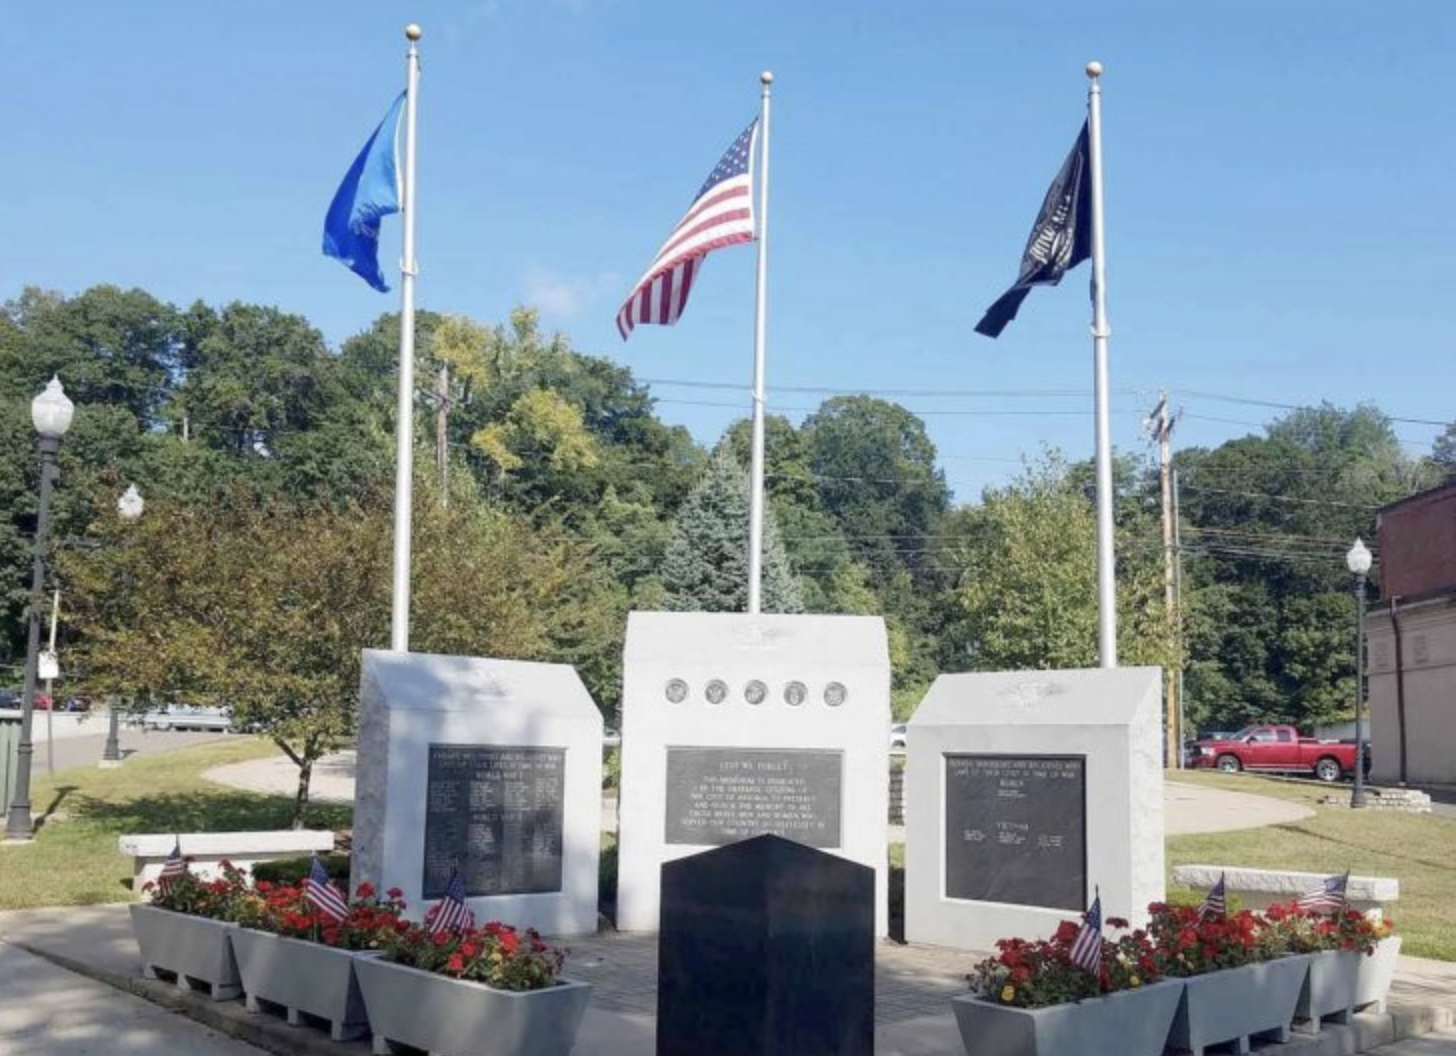 Ansonia built Veterans Memorial Park to honor all veterans in the 1990s